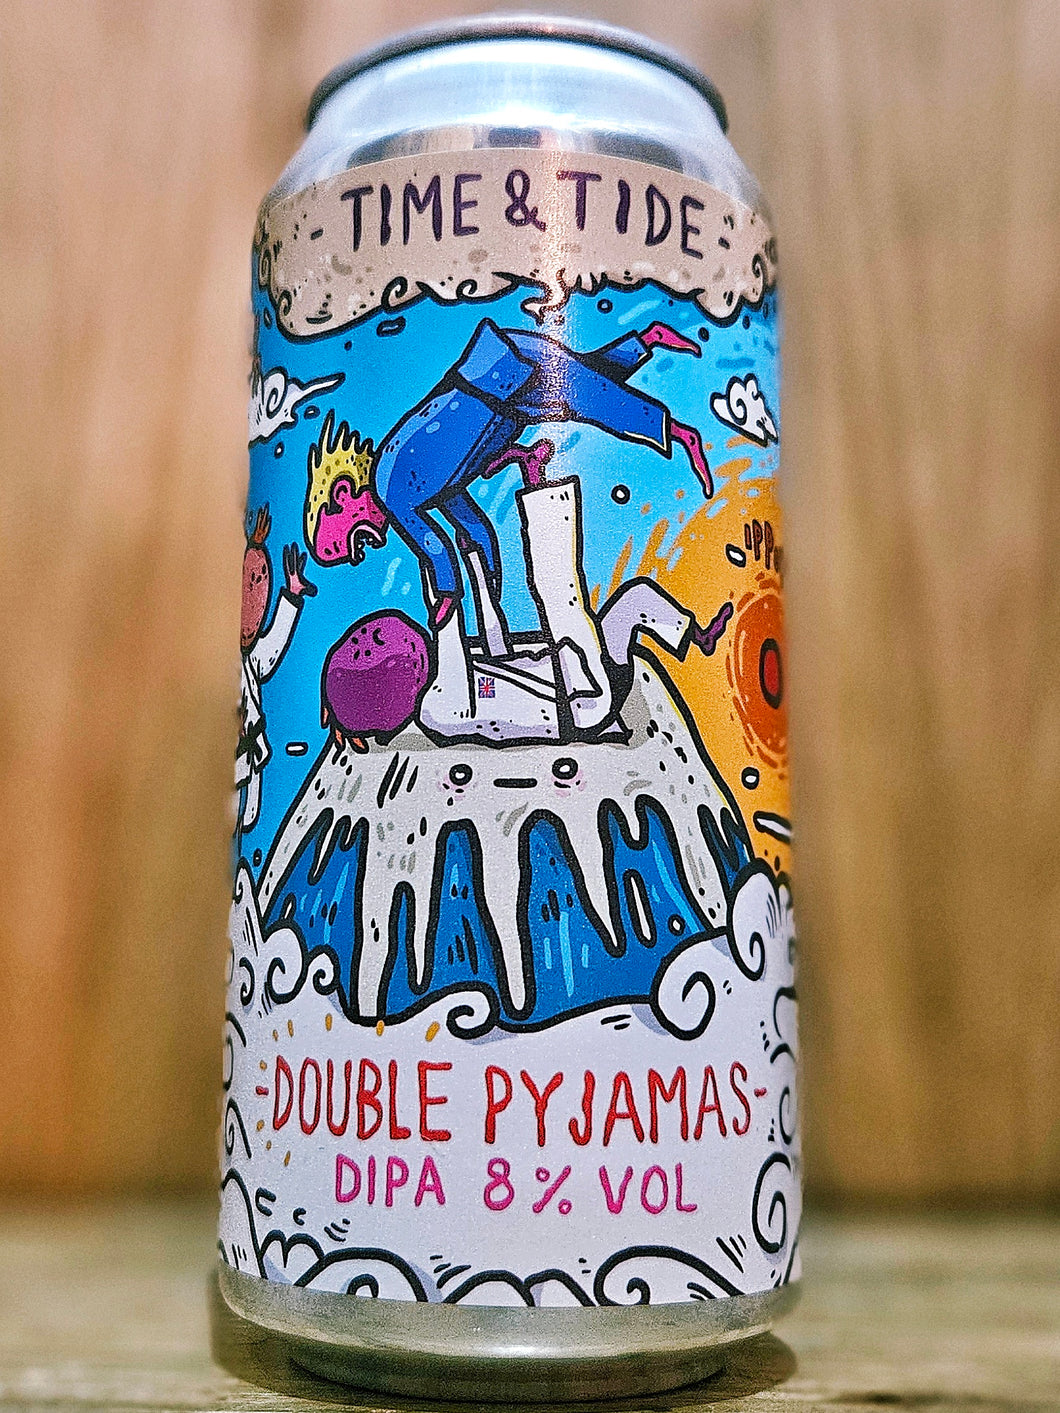 Time & Tide - Double Pyjamas